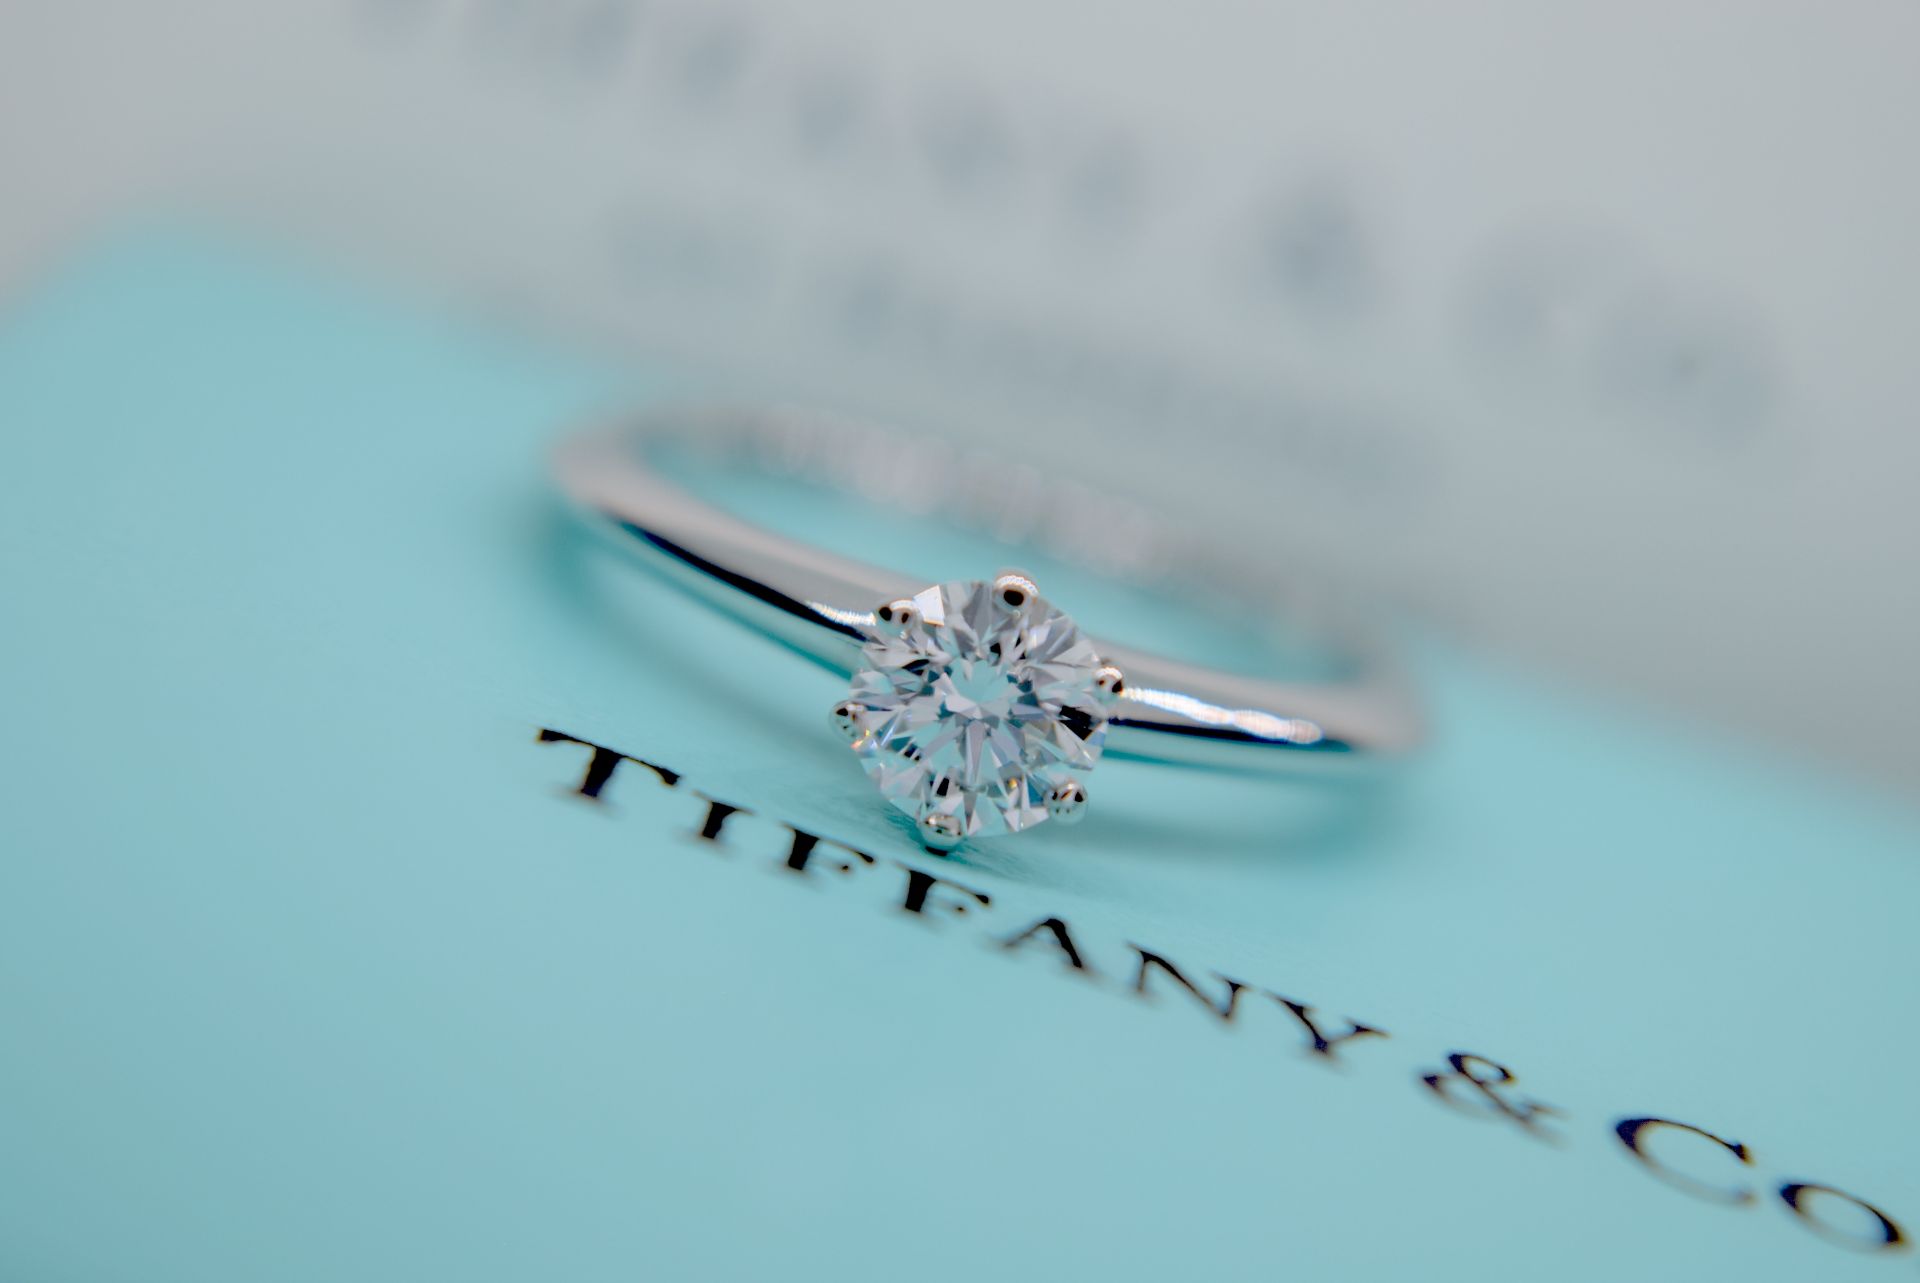 *HARRODS* TIFFANY & CO PLATINUM VVS2 DIAMOND SOLITAIRE RING "THE TIFFANY SETTING®" - BOX & CERT - Image 13 of 17